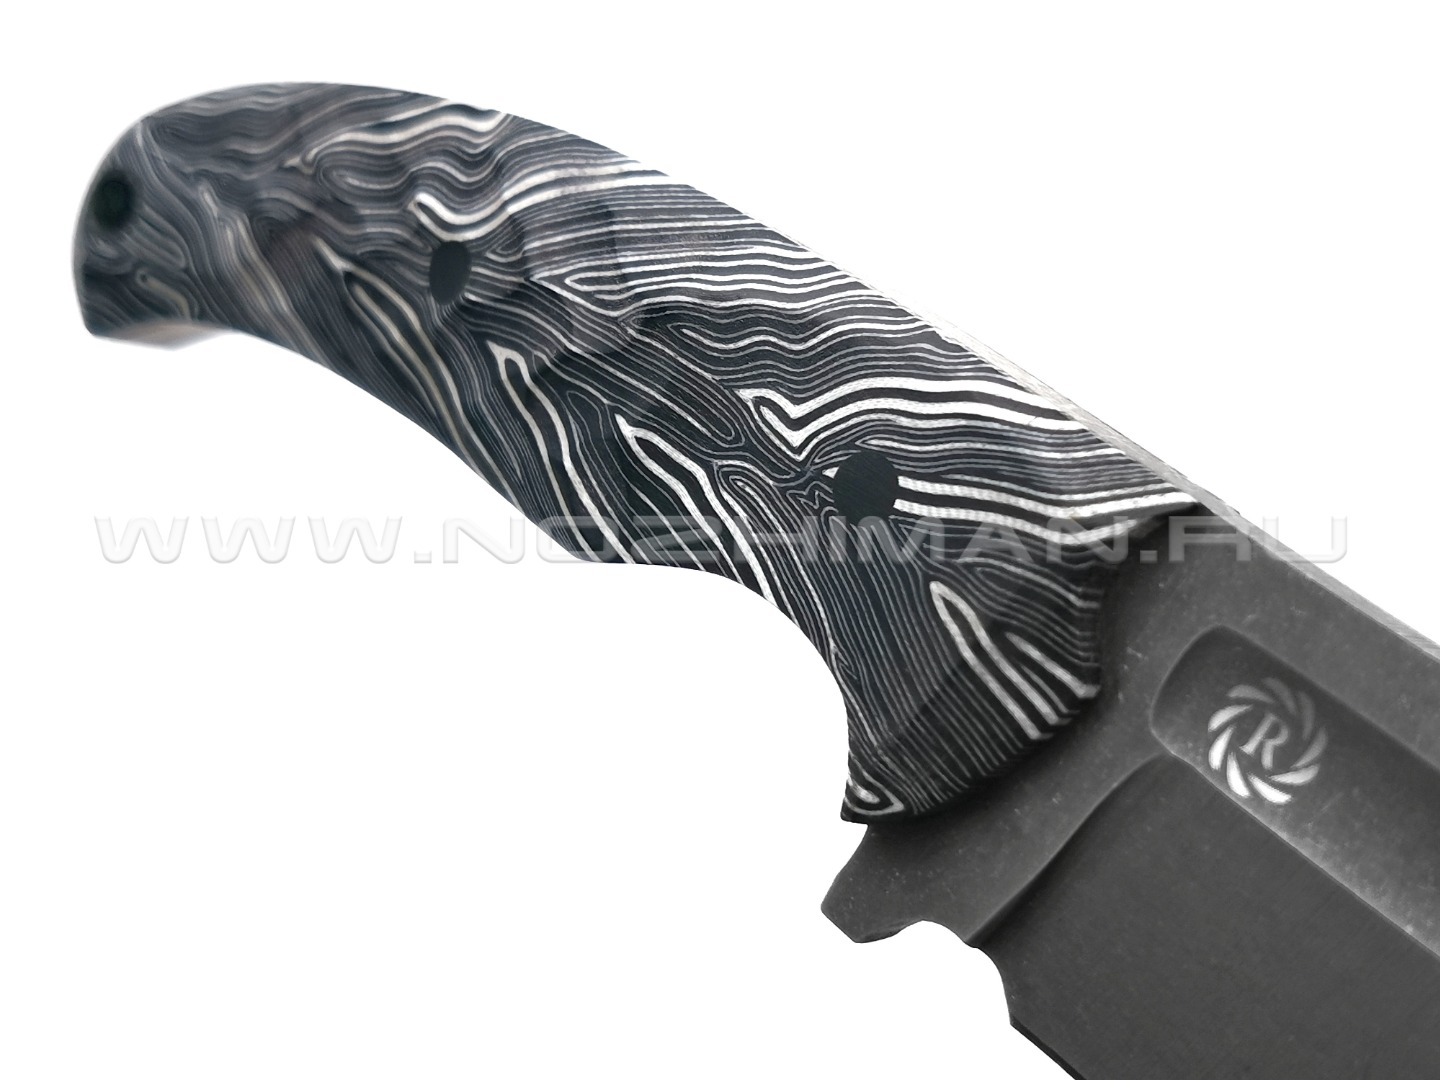 Neyris Knives нож Перс-М сталь CPM 3V, рукоять Chaotic G10 black & white